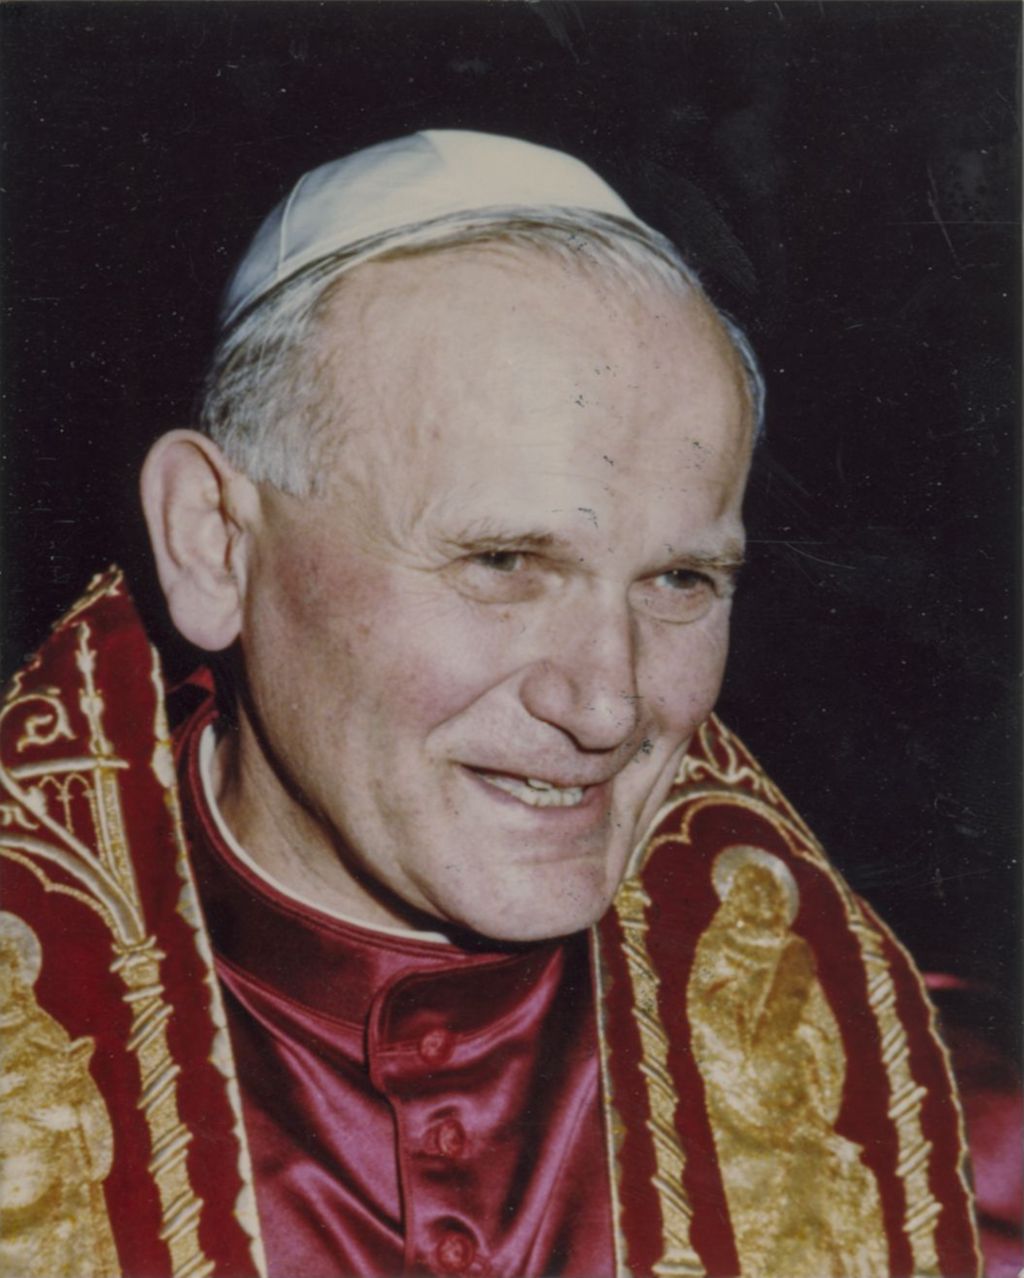 Miniature of Pope John Paul II